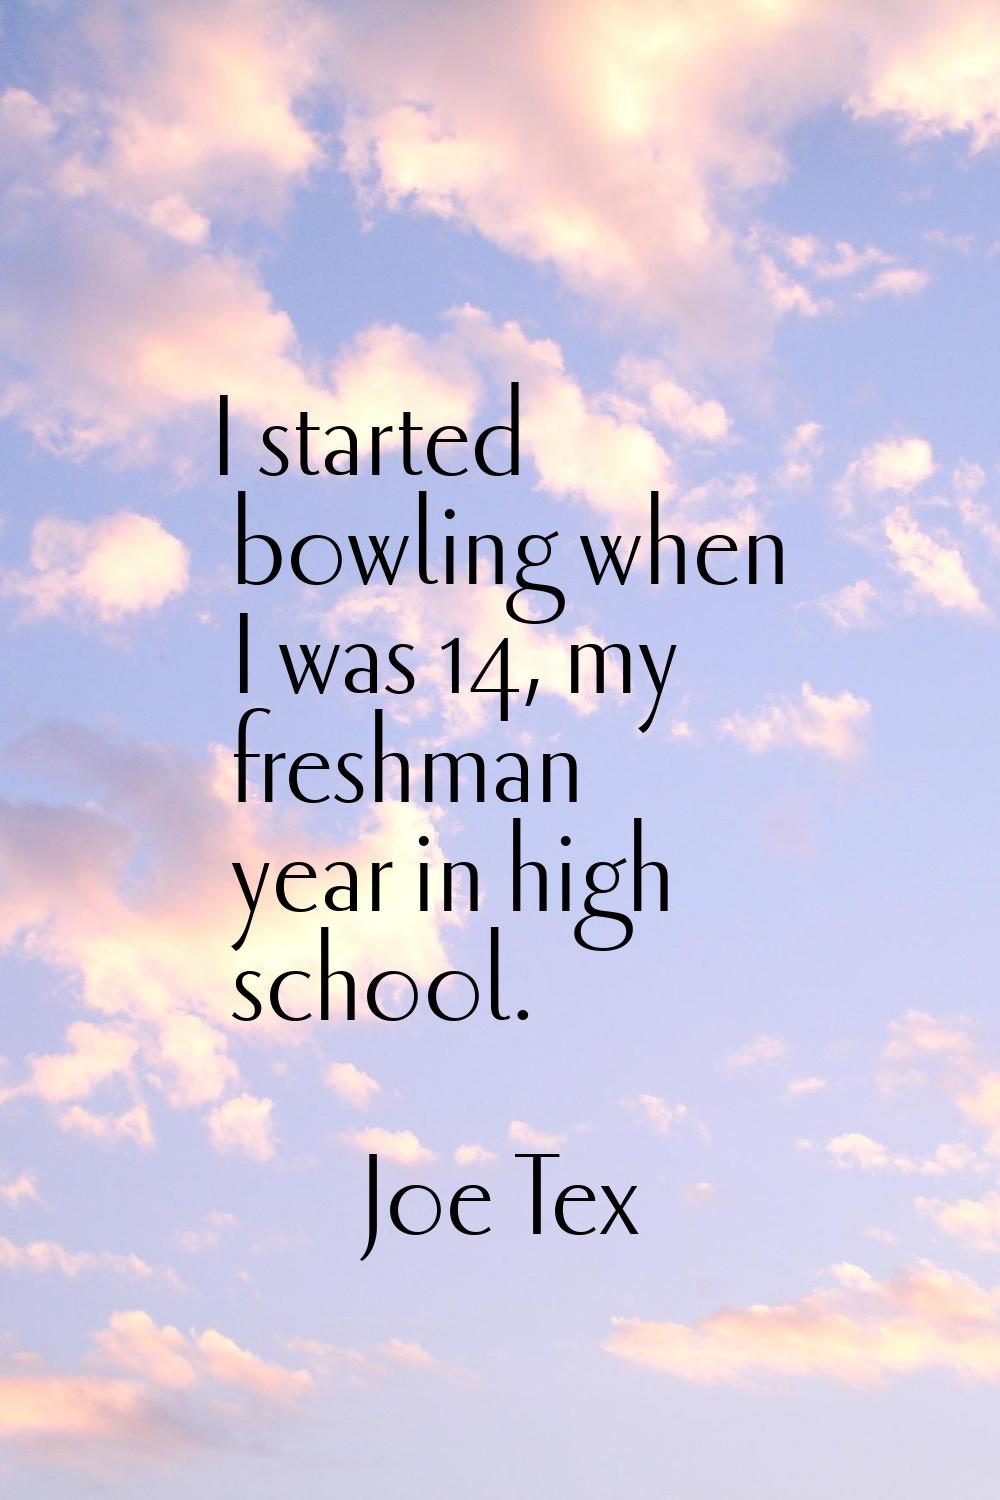 I started bowling when I was 14, my freshman year in high school.